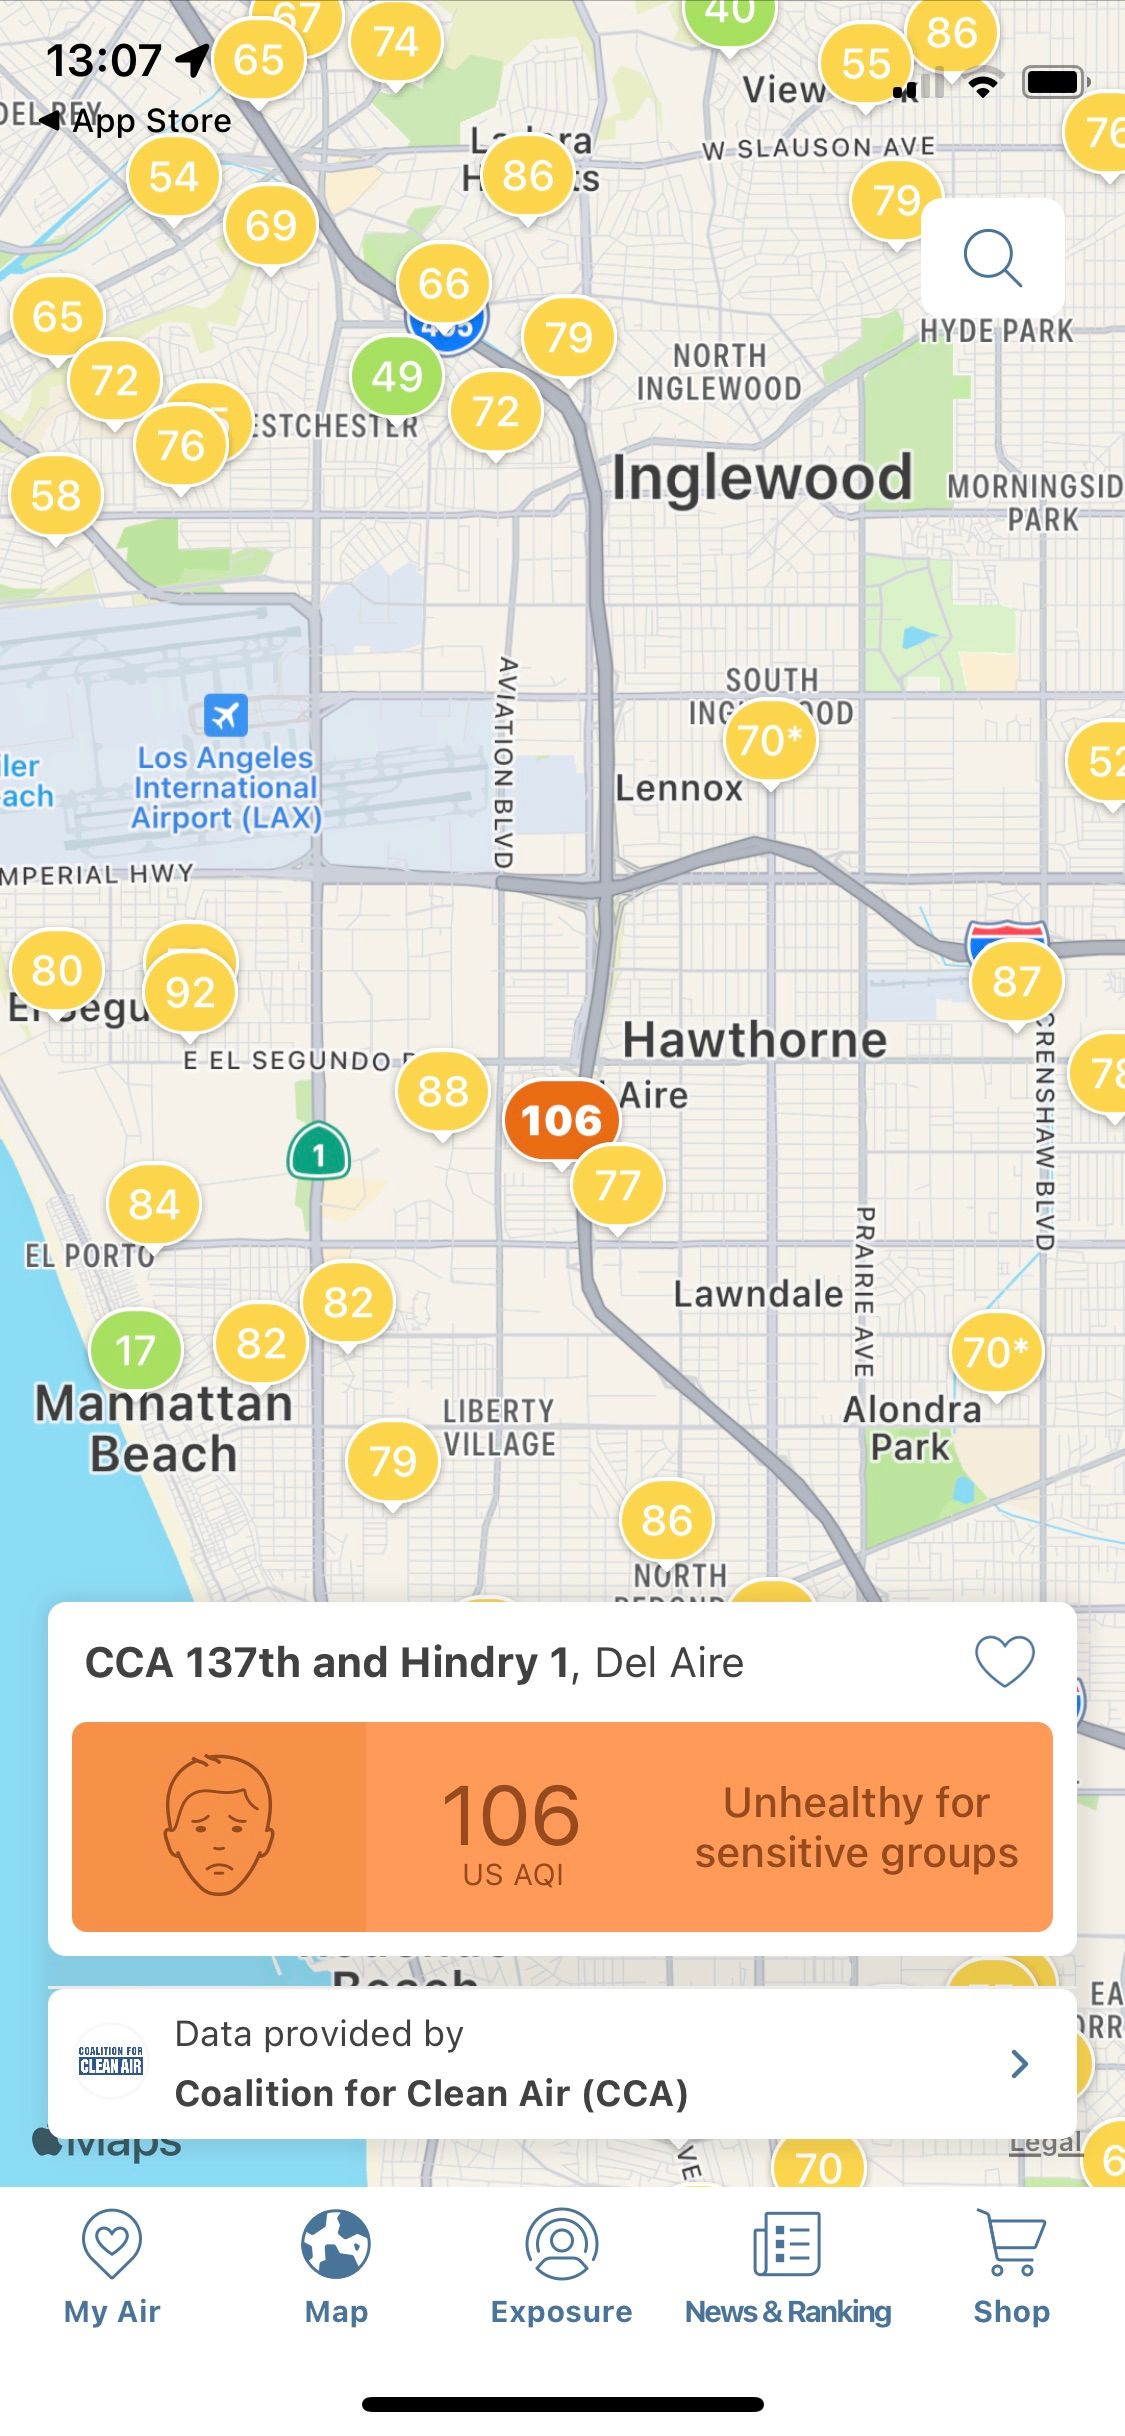 Screenshot of IQAir app showing live air quality data in LA